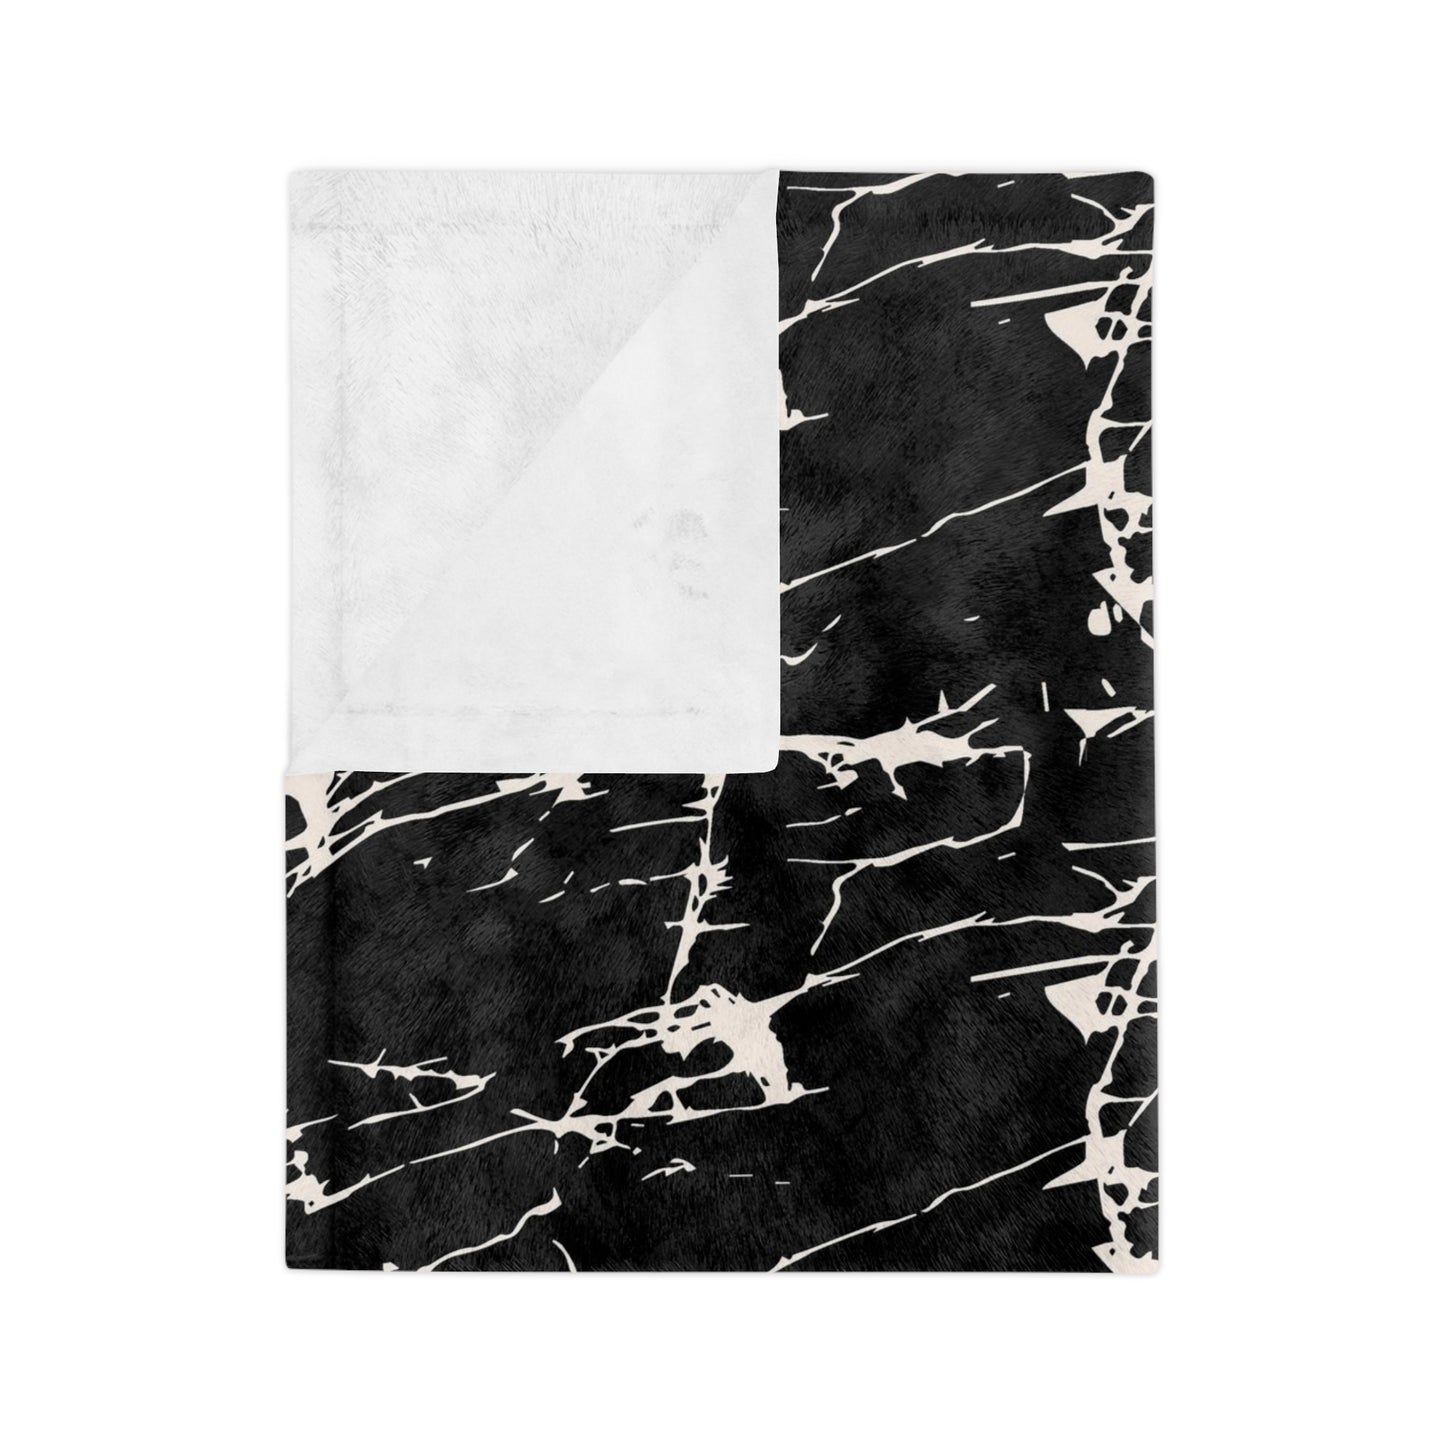 Marvelous Marble Theme Throw Sofa Bed Blanket Black White Marble - Soft Thick Velveteen Minky Throw Blanket